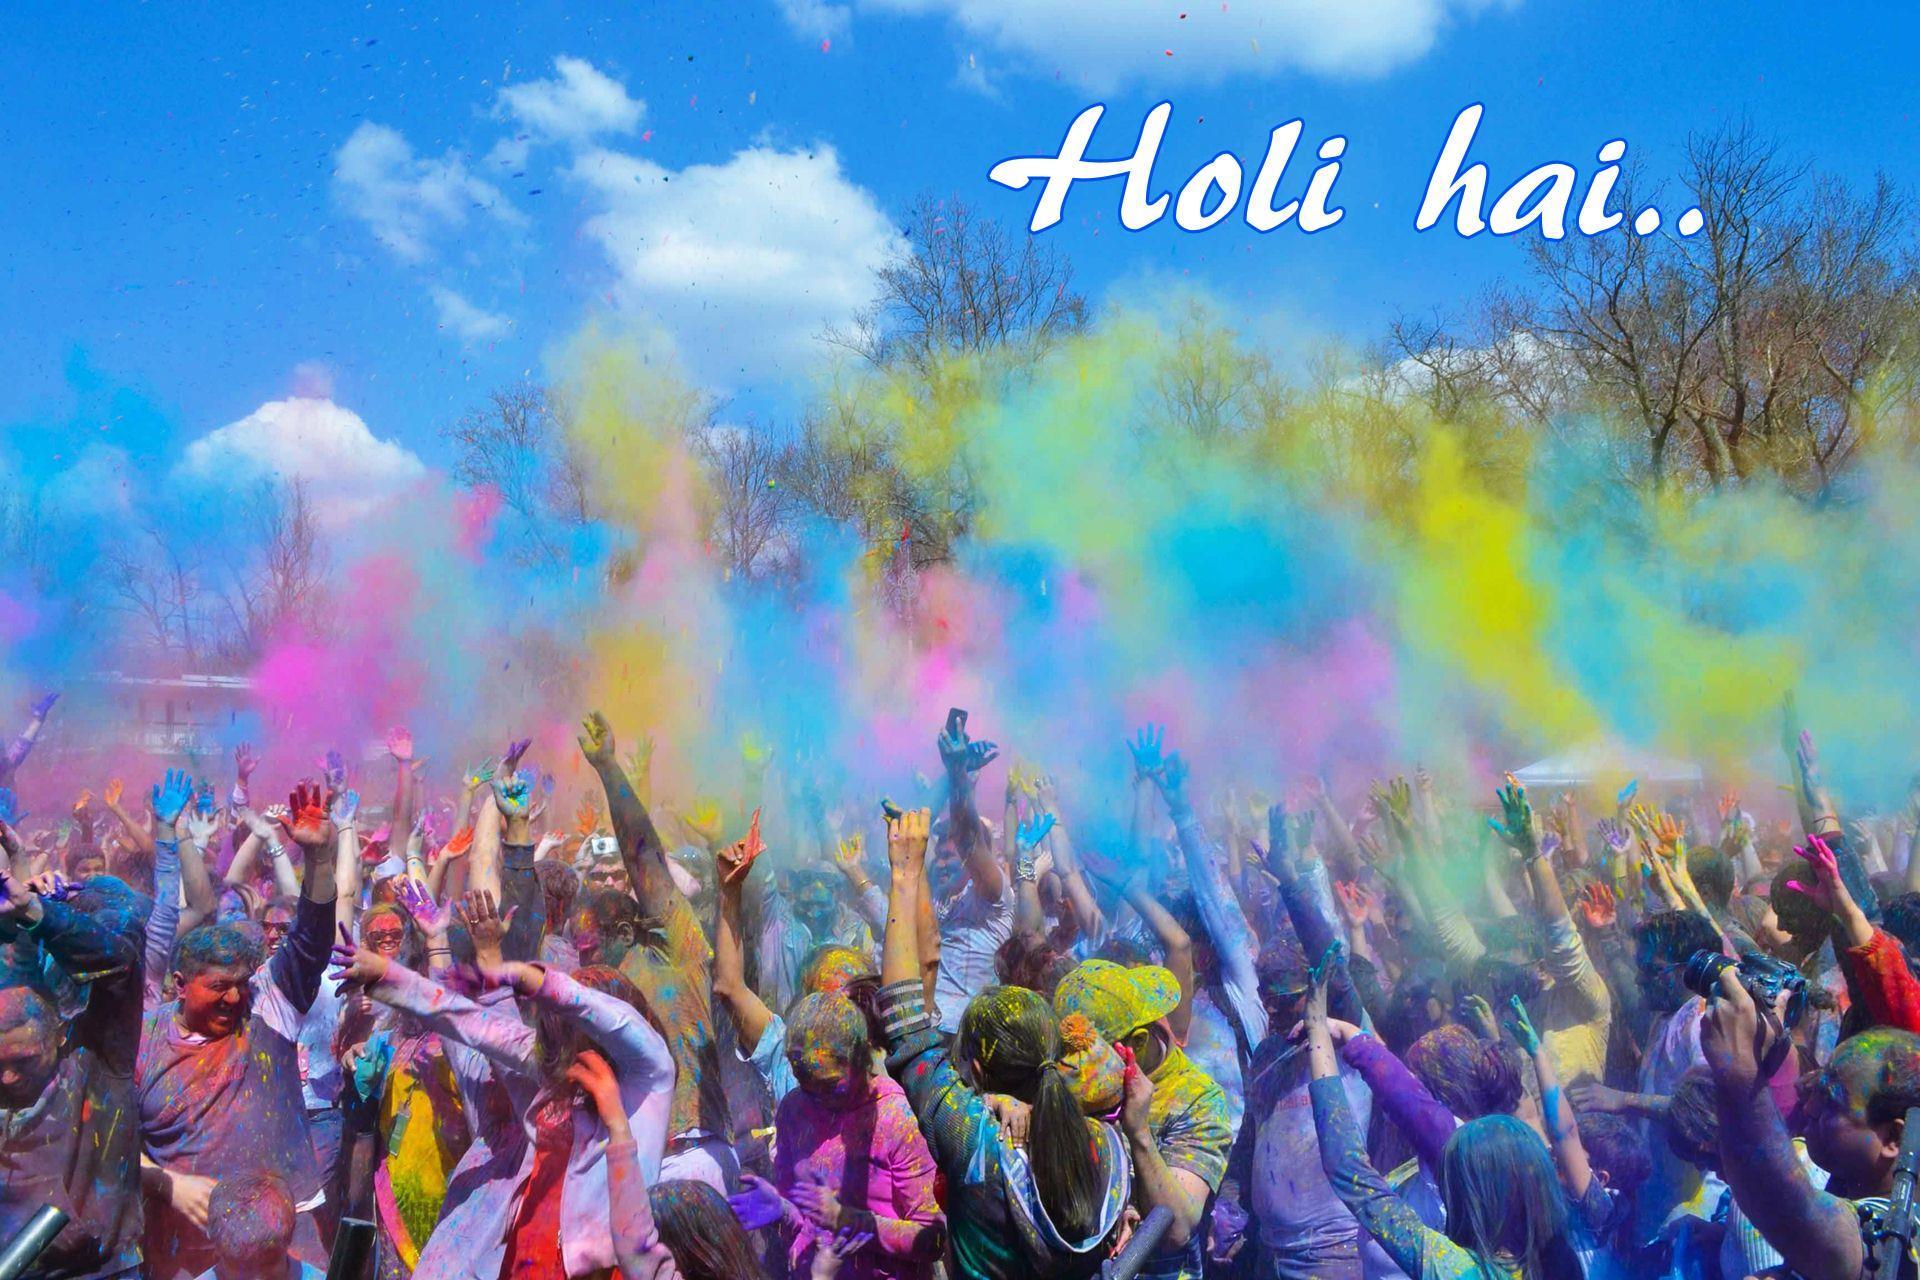 Happy Holi Wishes HD Wallpaper Download Us Publish